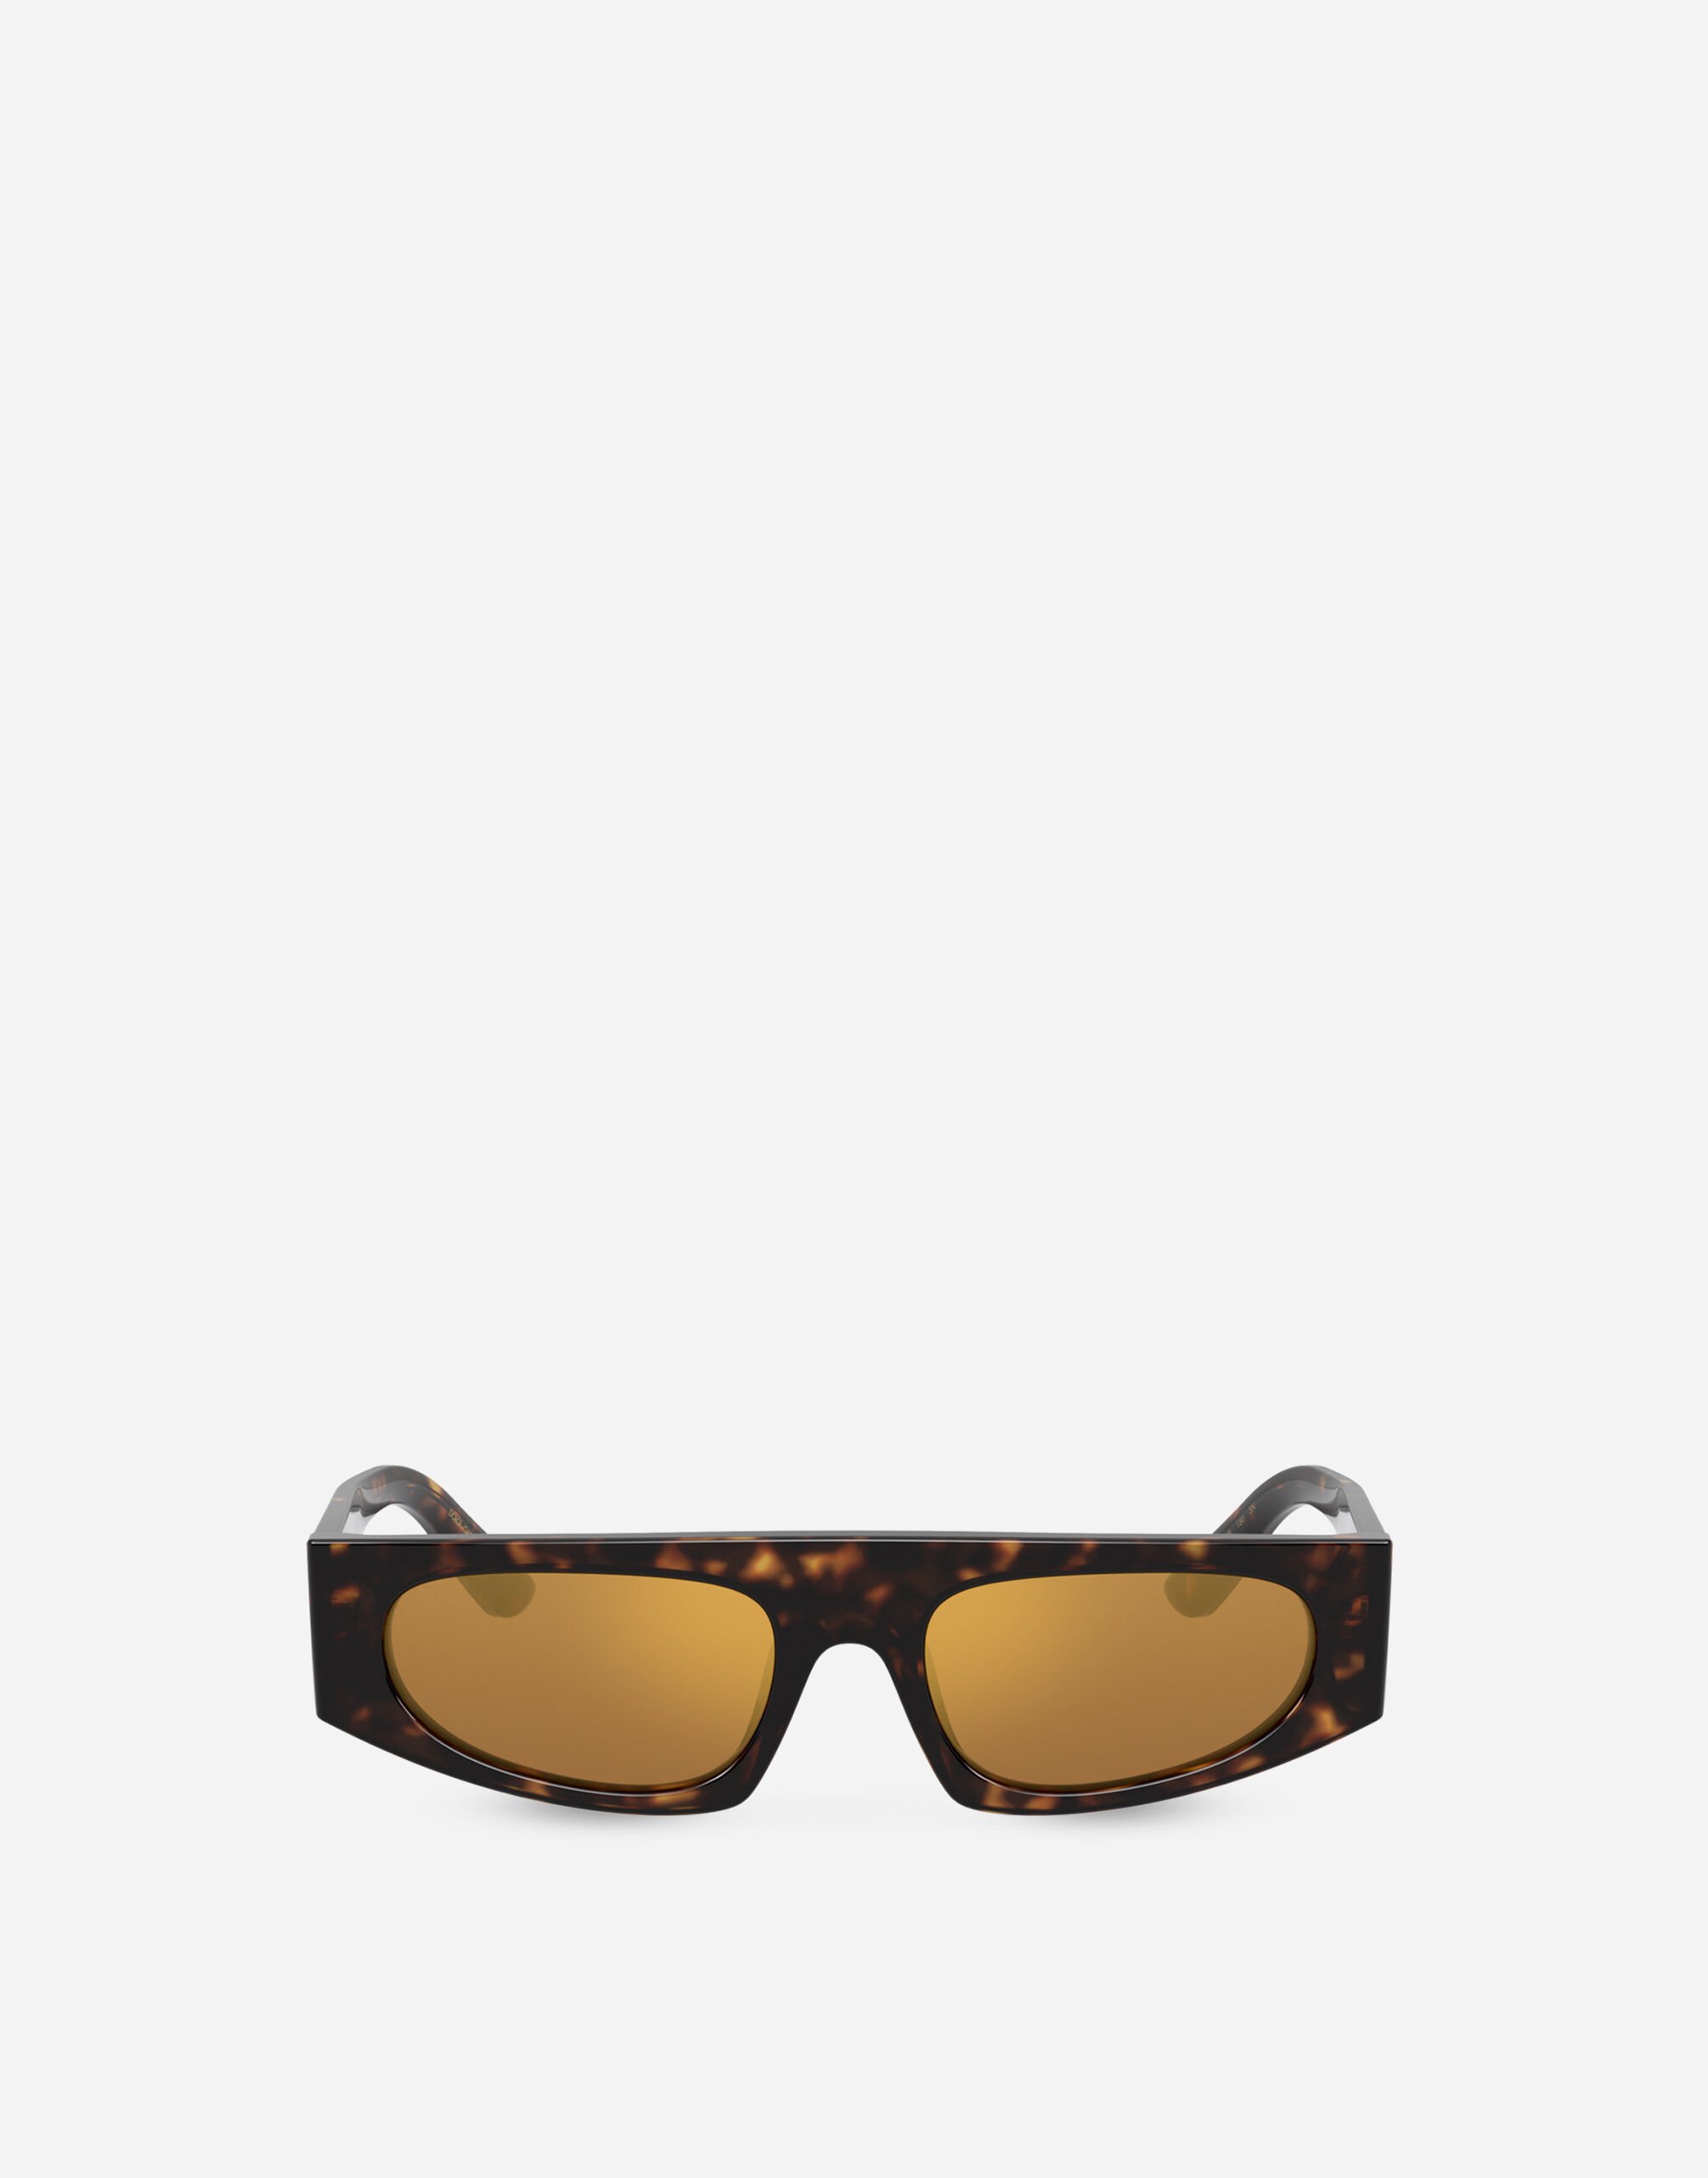 Dolce & Gabbana "Mini Me" sunglasses Black EM0125AB205